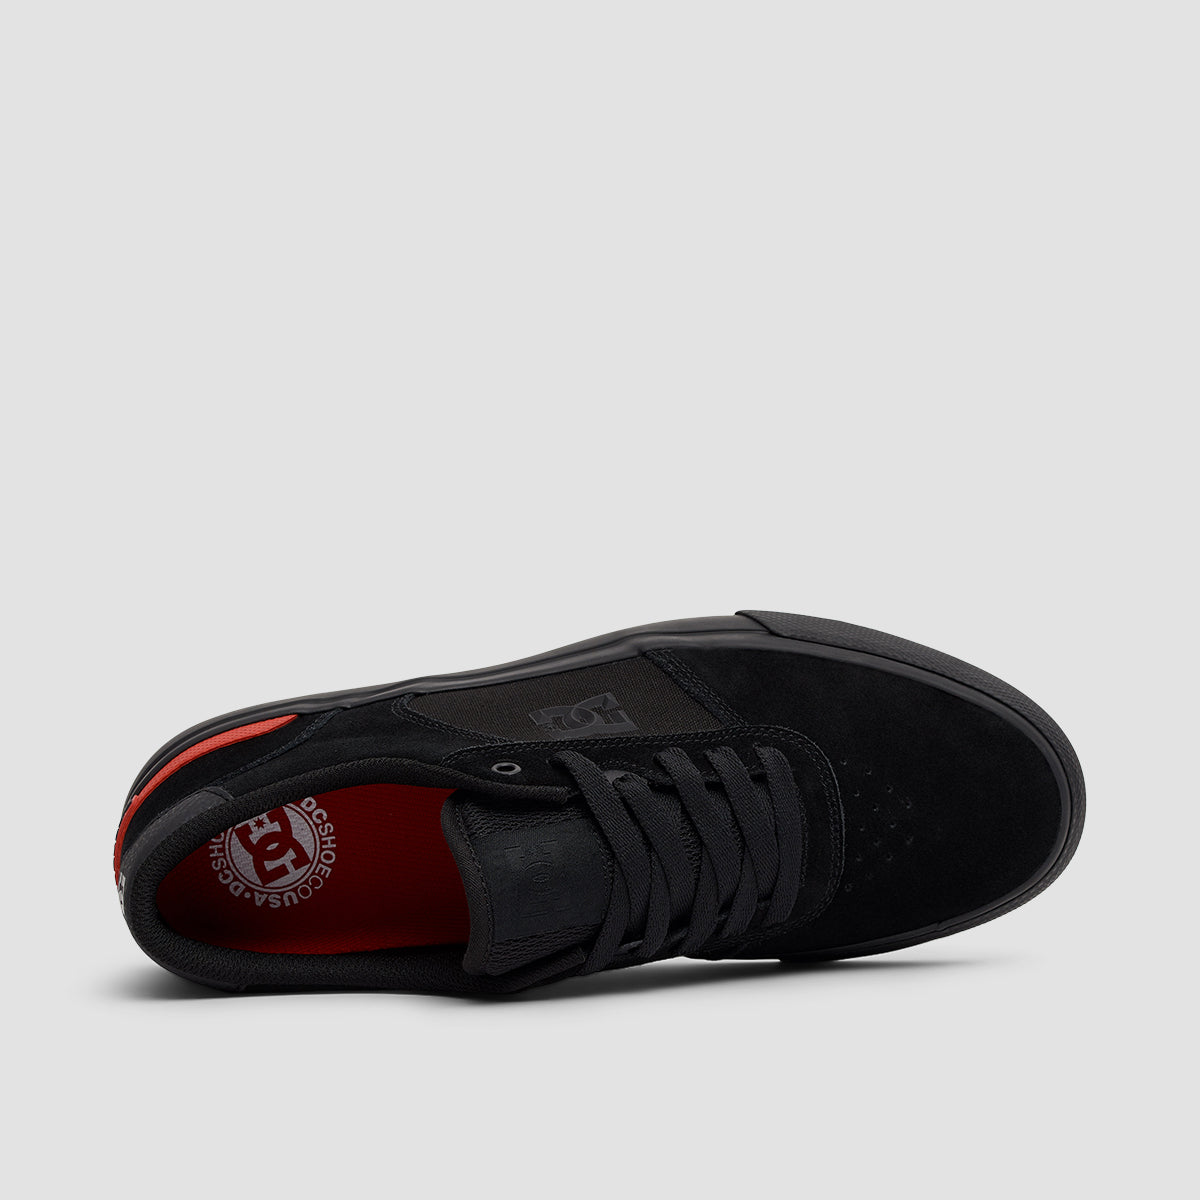 DC Teknic S Shoes - Black/Black/Red